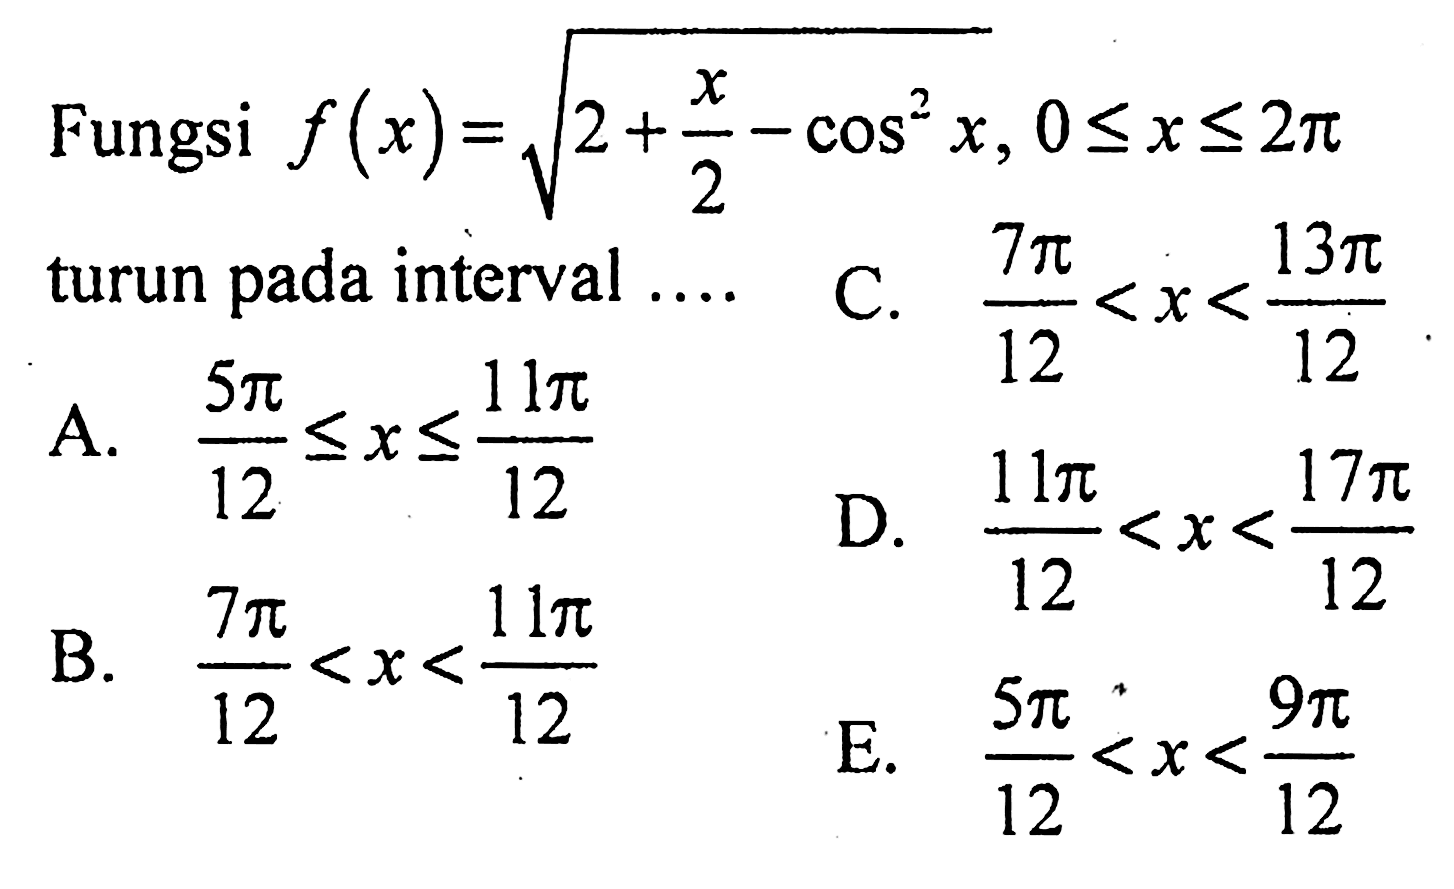 Fungsi f(x)=akar(2+x/2-cos^2 x), 0<=x<=2pi turun pada interval ...